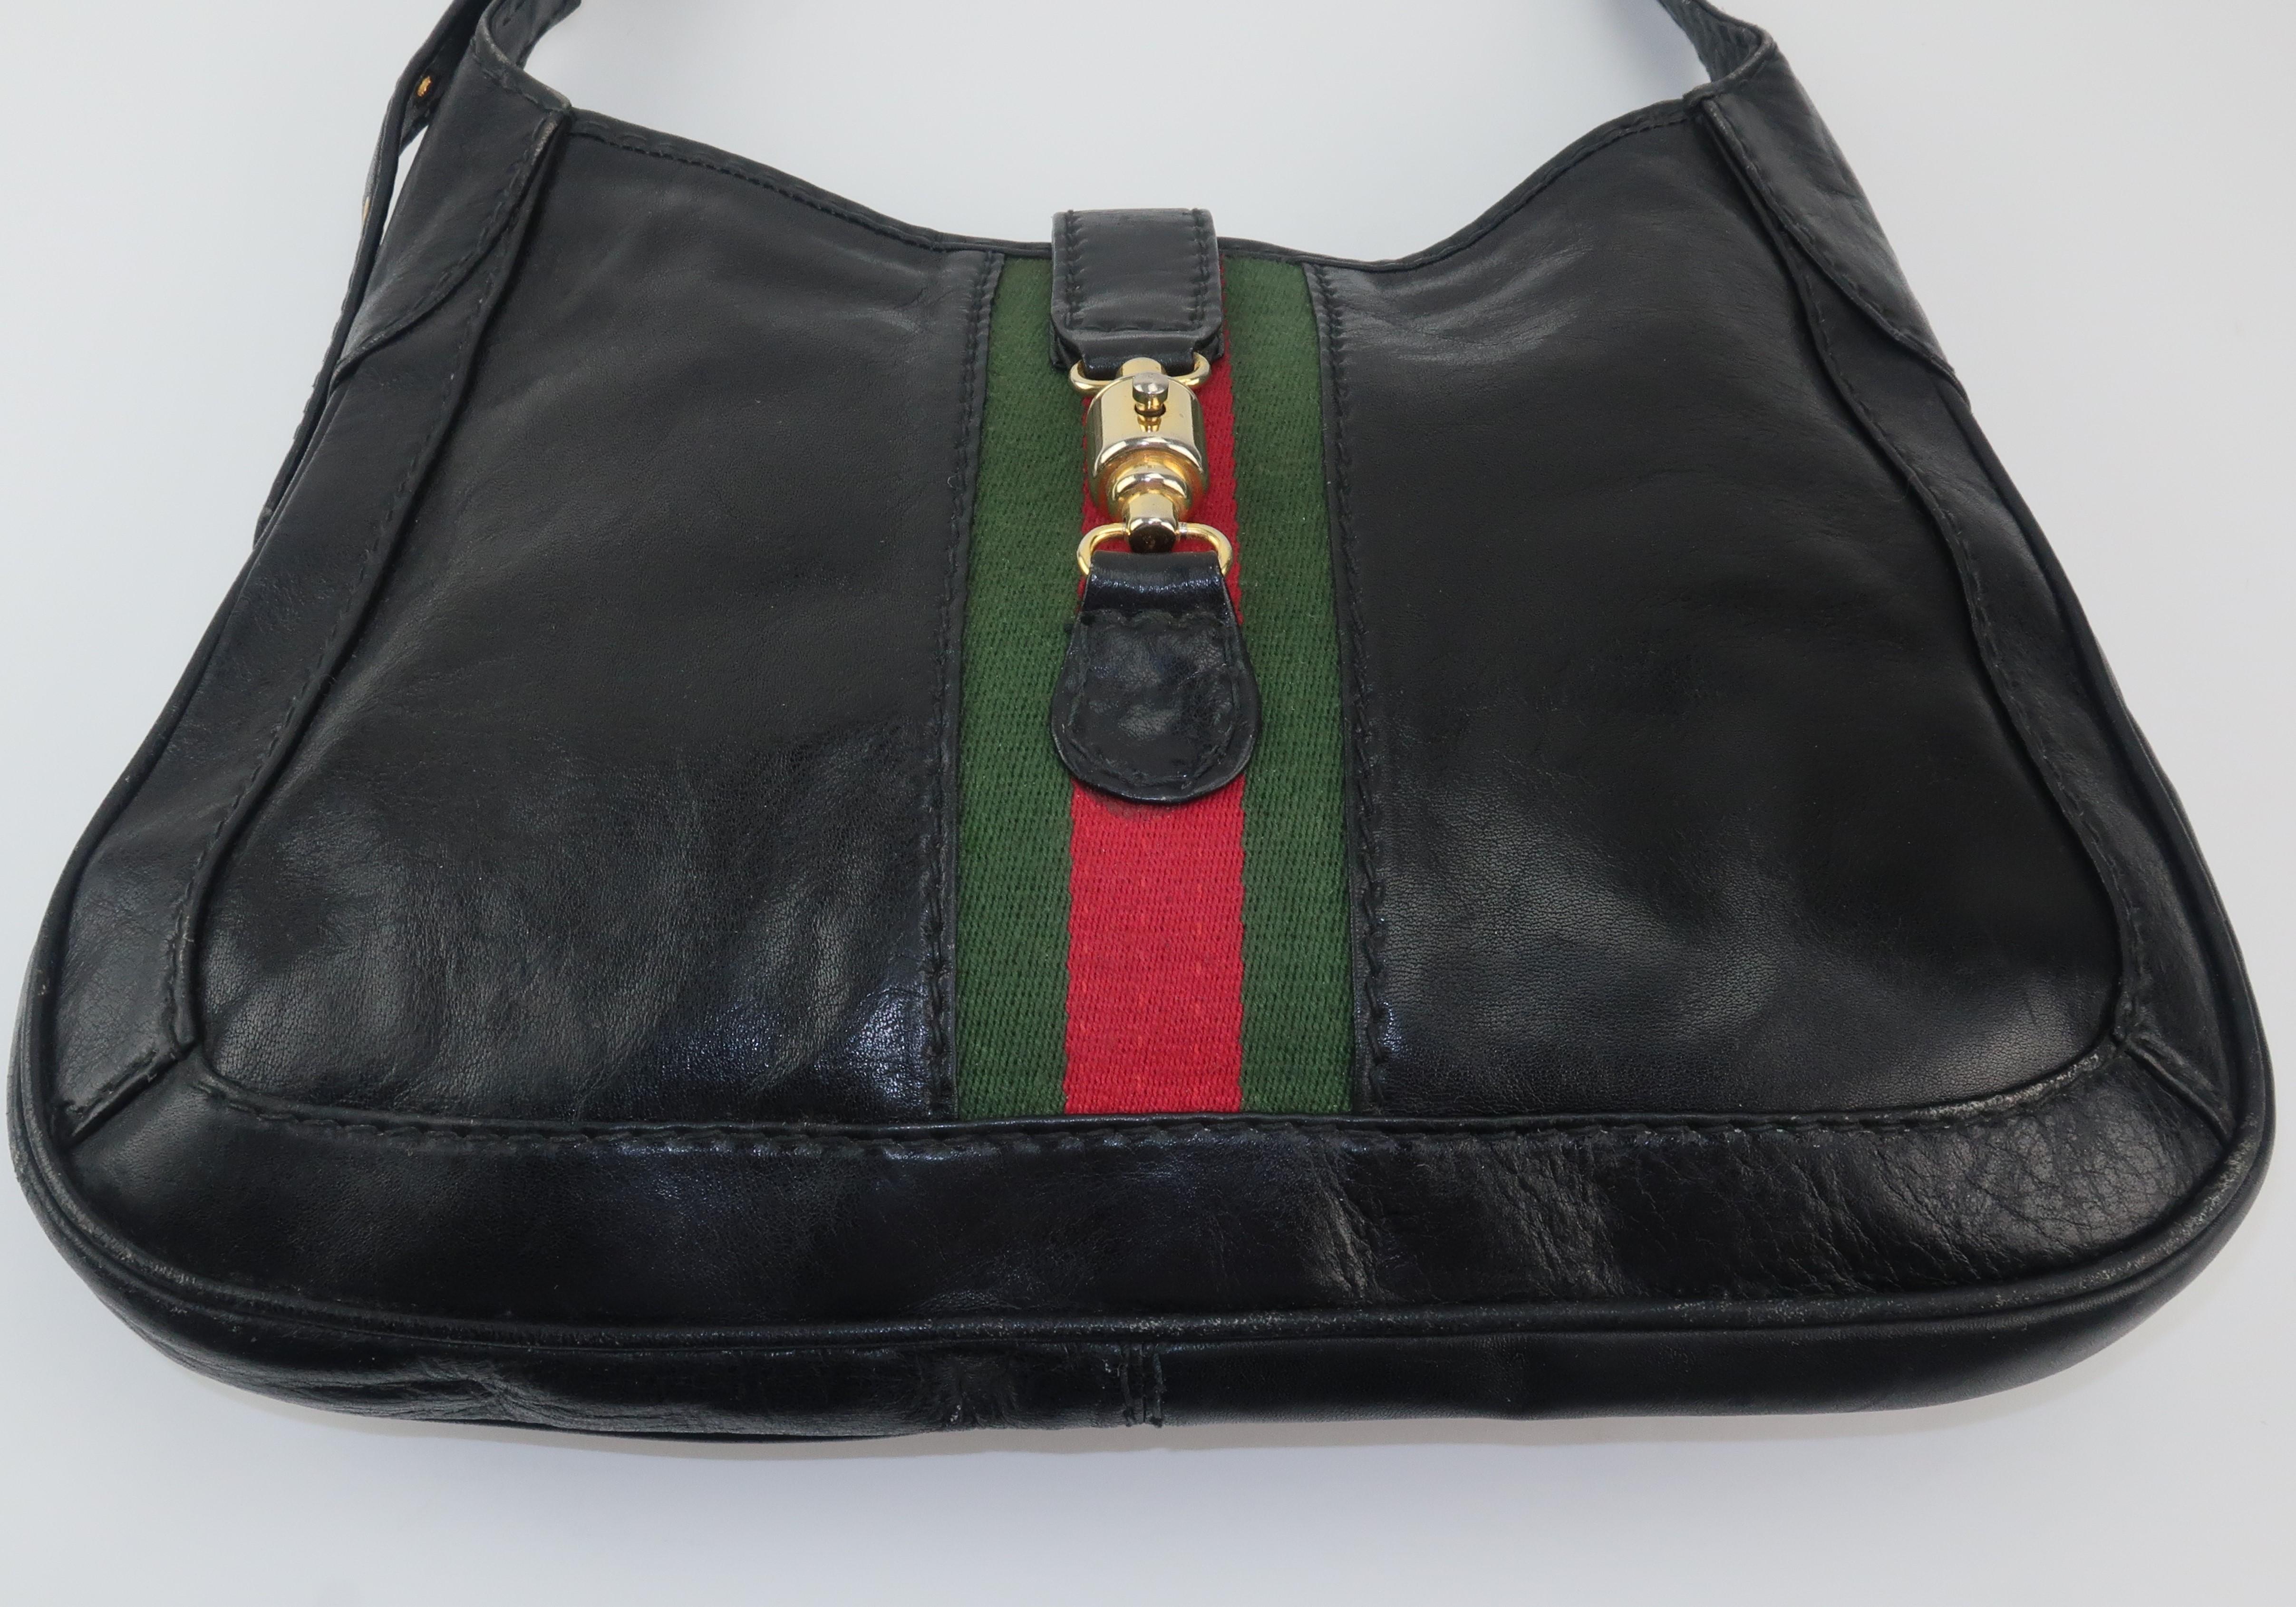 Women's Equestrian Style Italian Black Leather Handbag For Neiman Marcus, C.1970